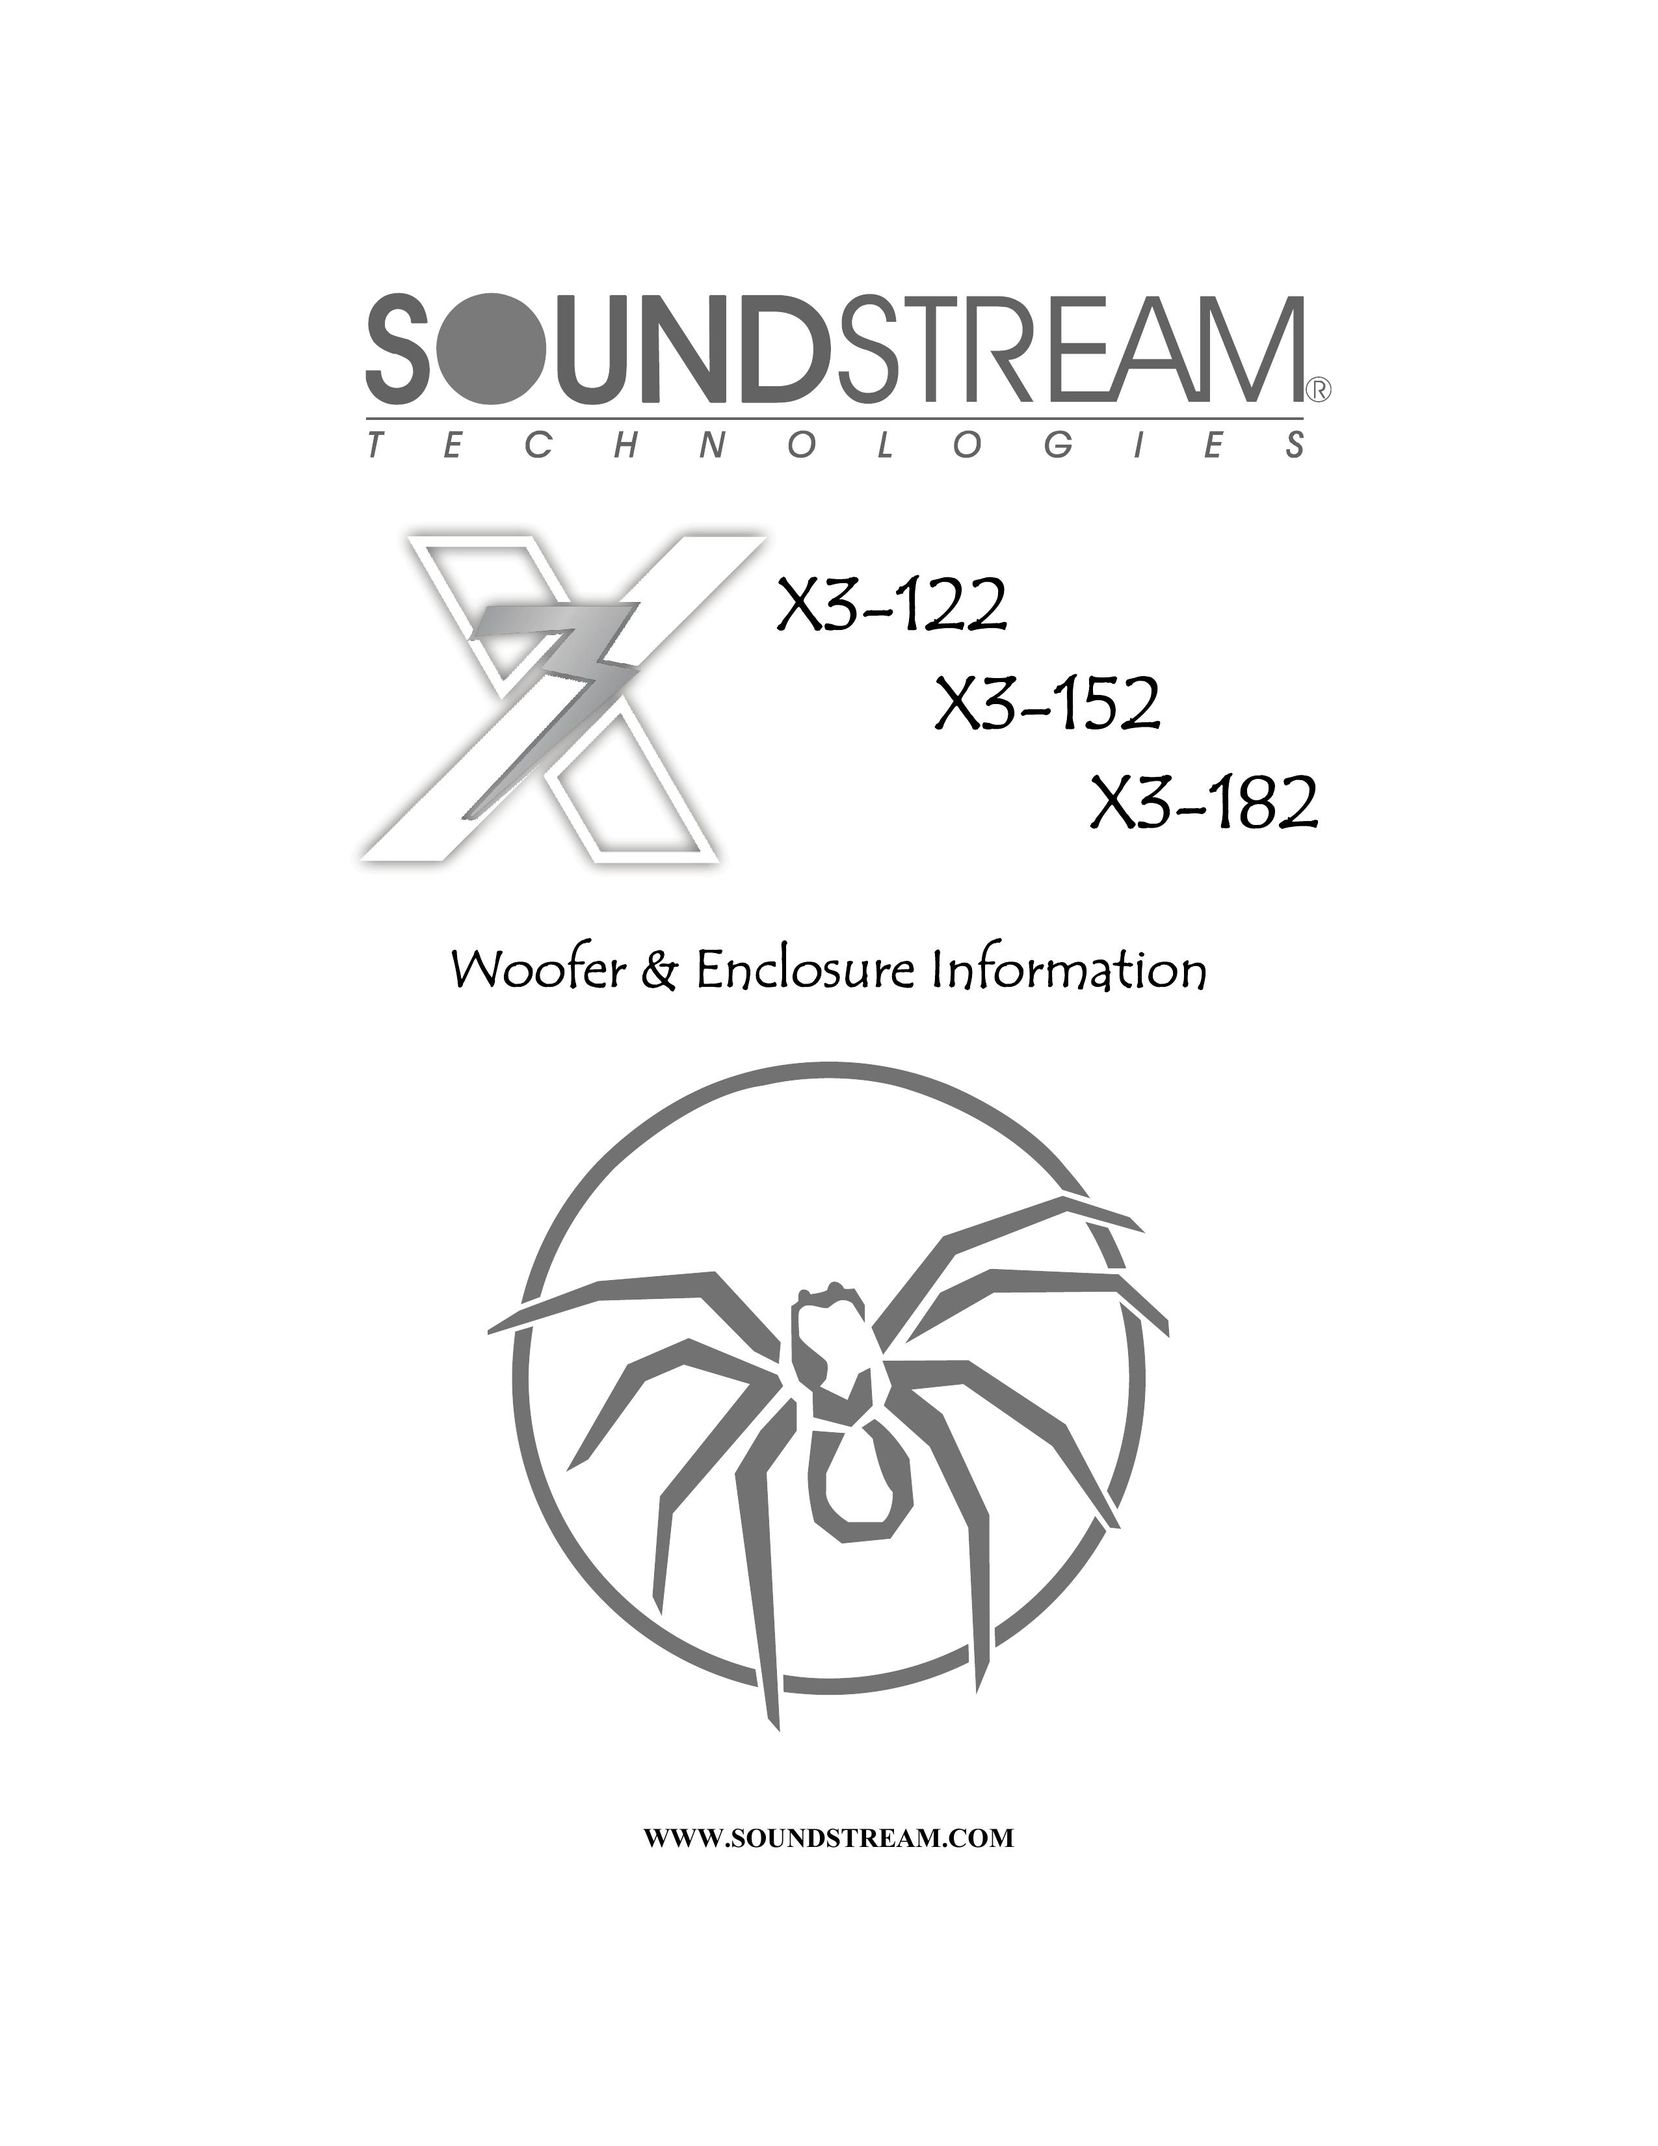 Soundstream Technologies X3-182 Speaker User Manual